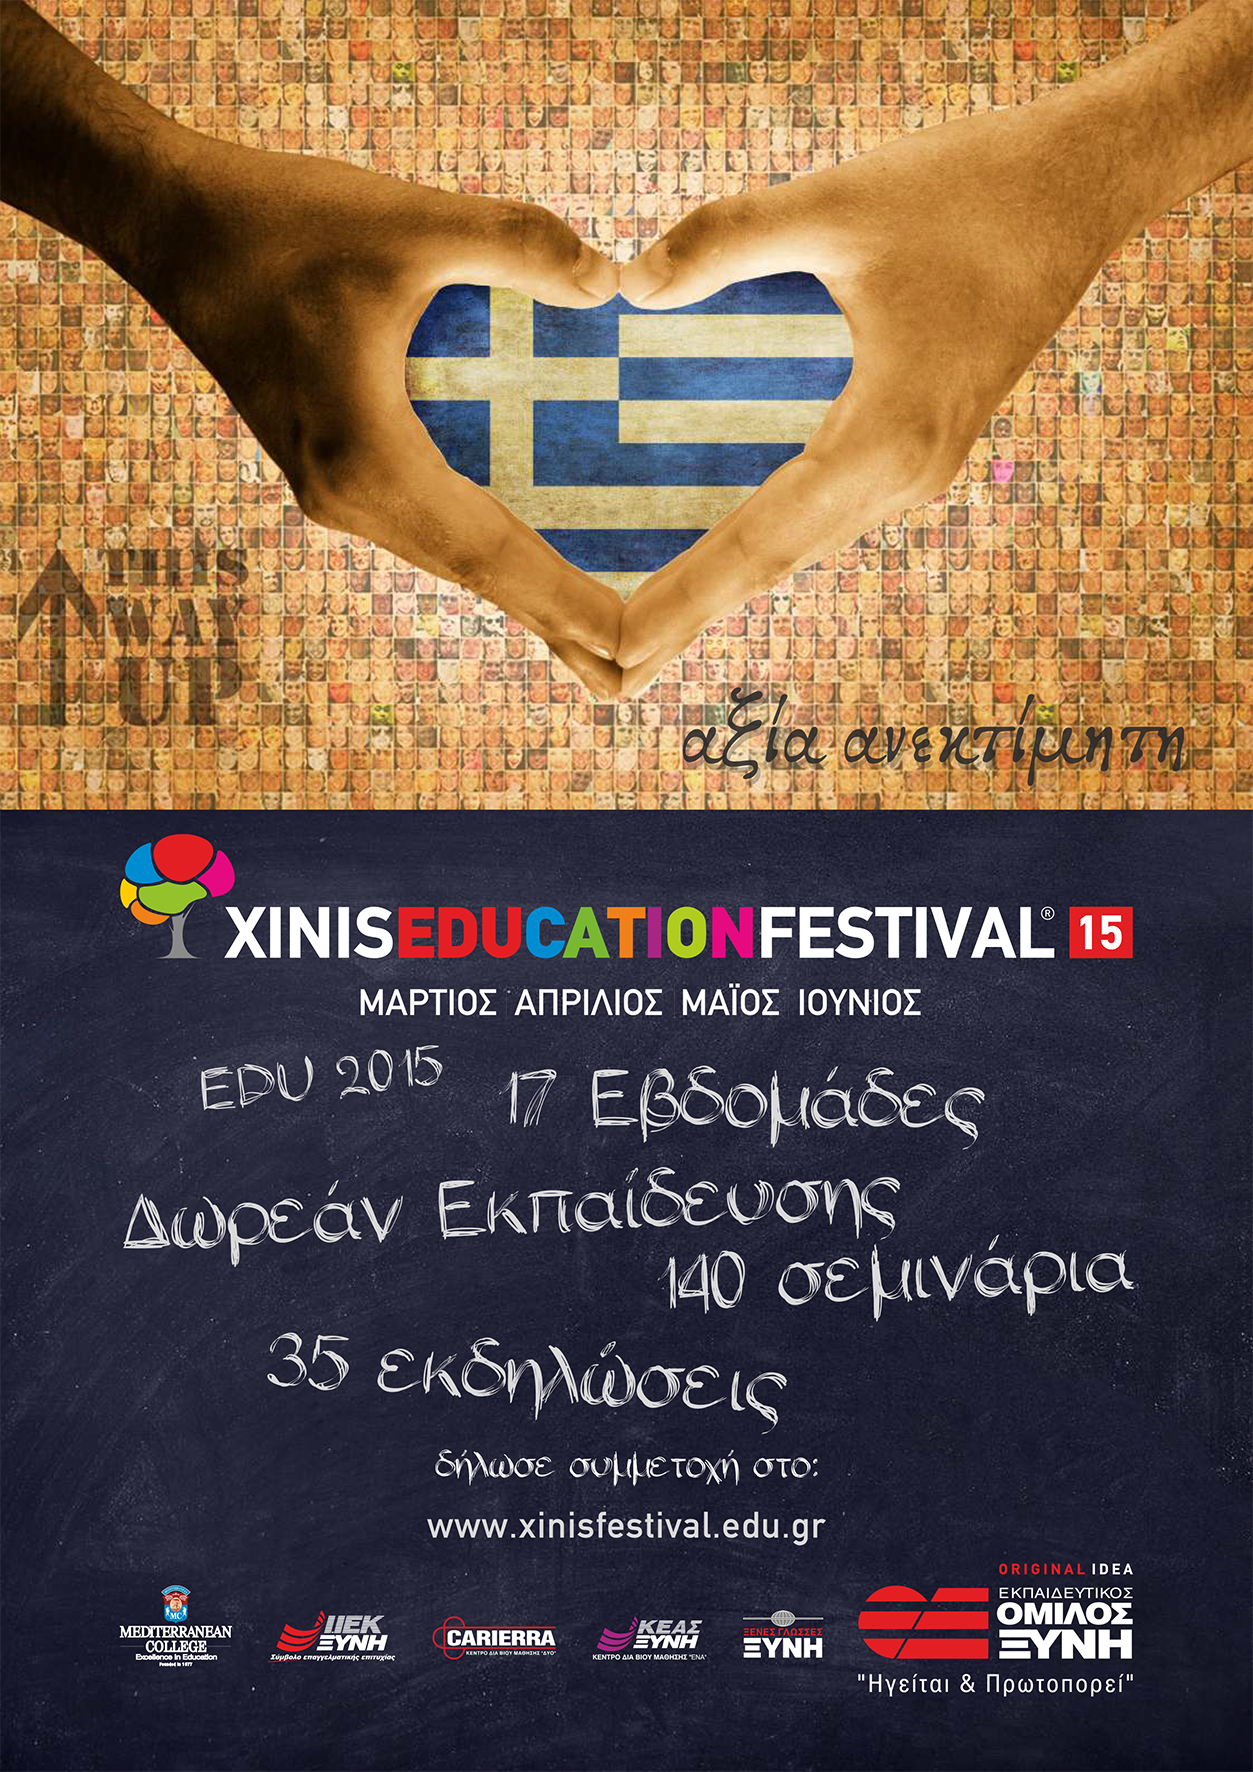 Xinis Education Festival 2015: «Ελλάδα… αξία ανεκτίμητη!»